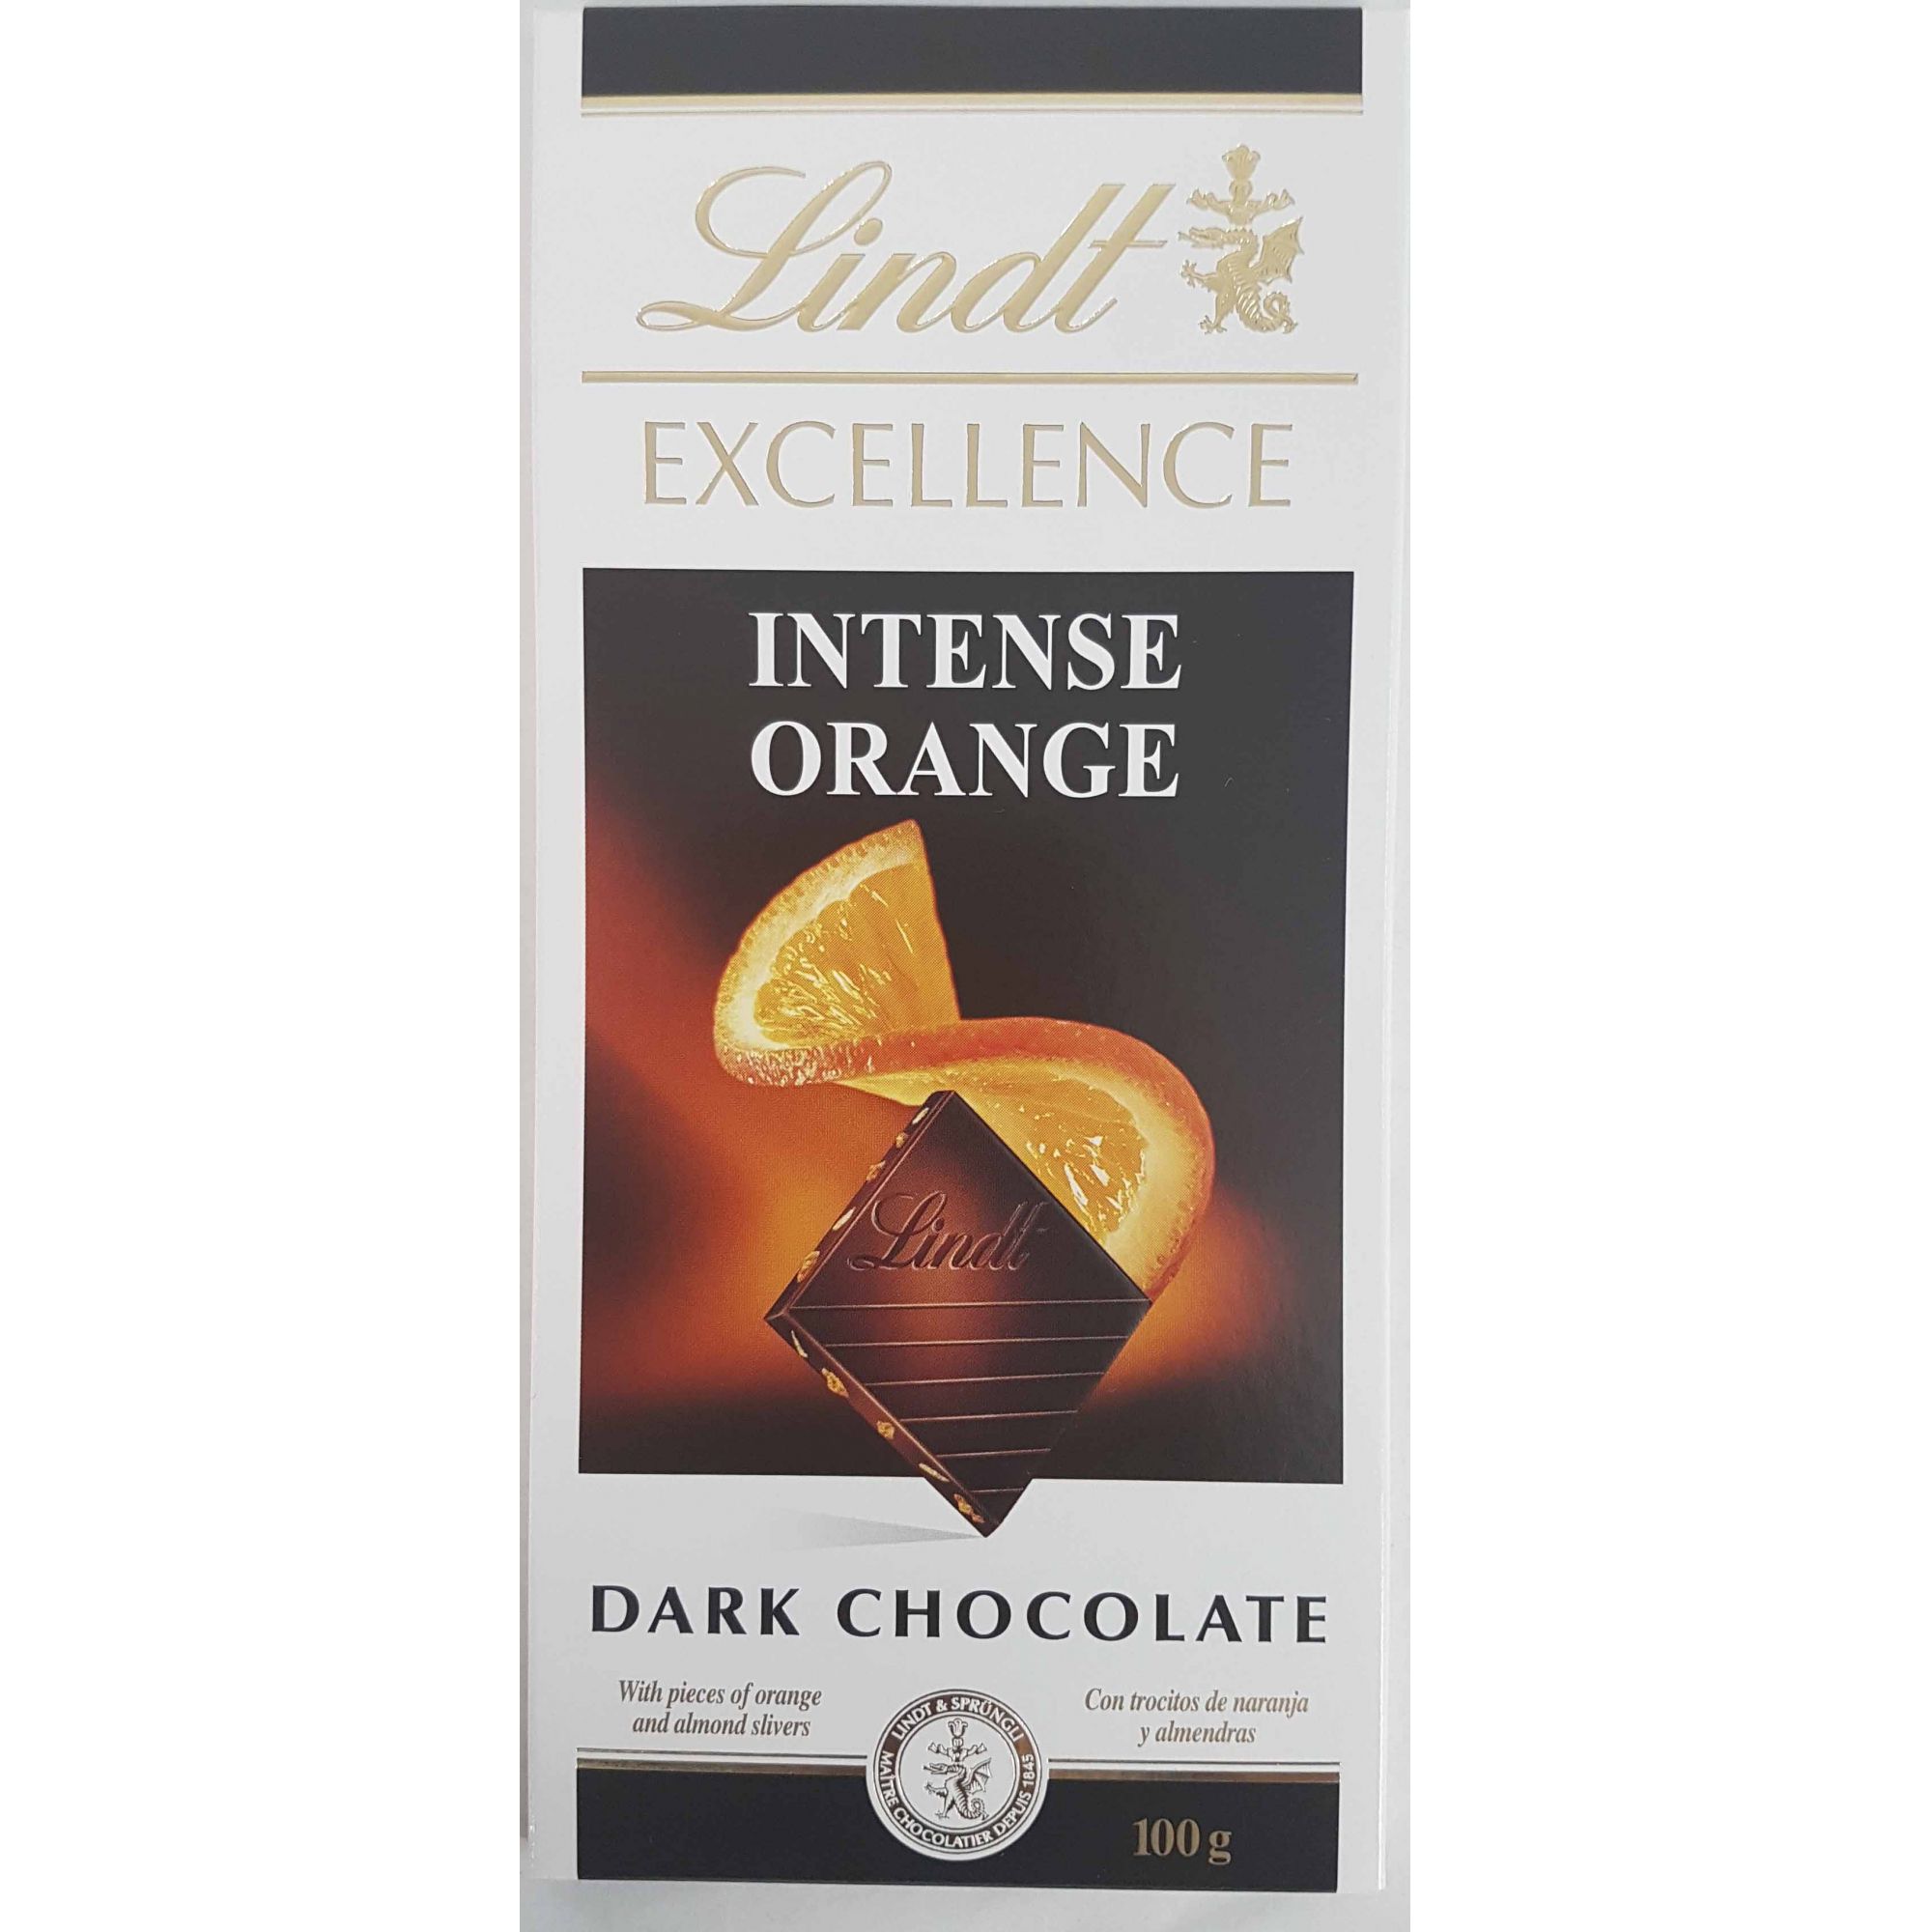 Chocolate Lindt Excellence Intense Orange - 100g -